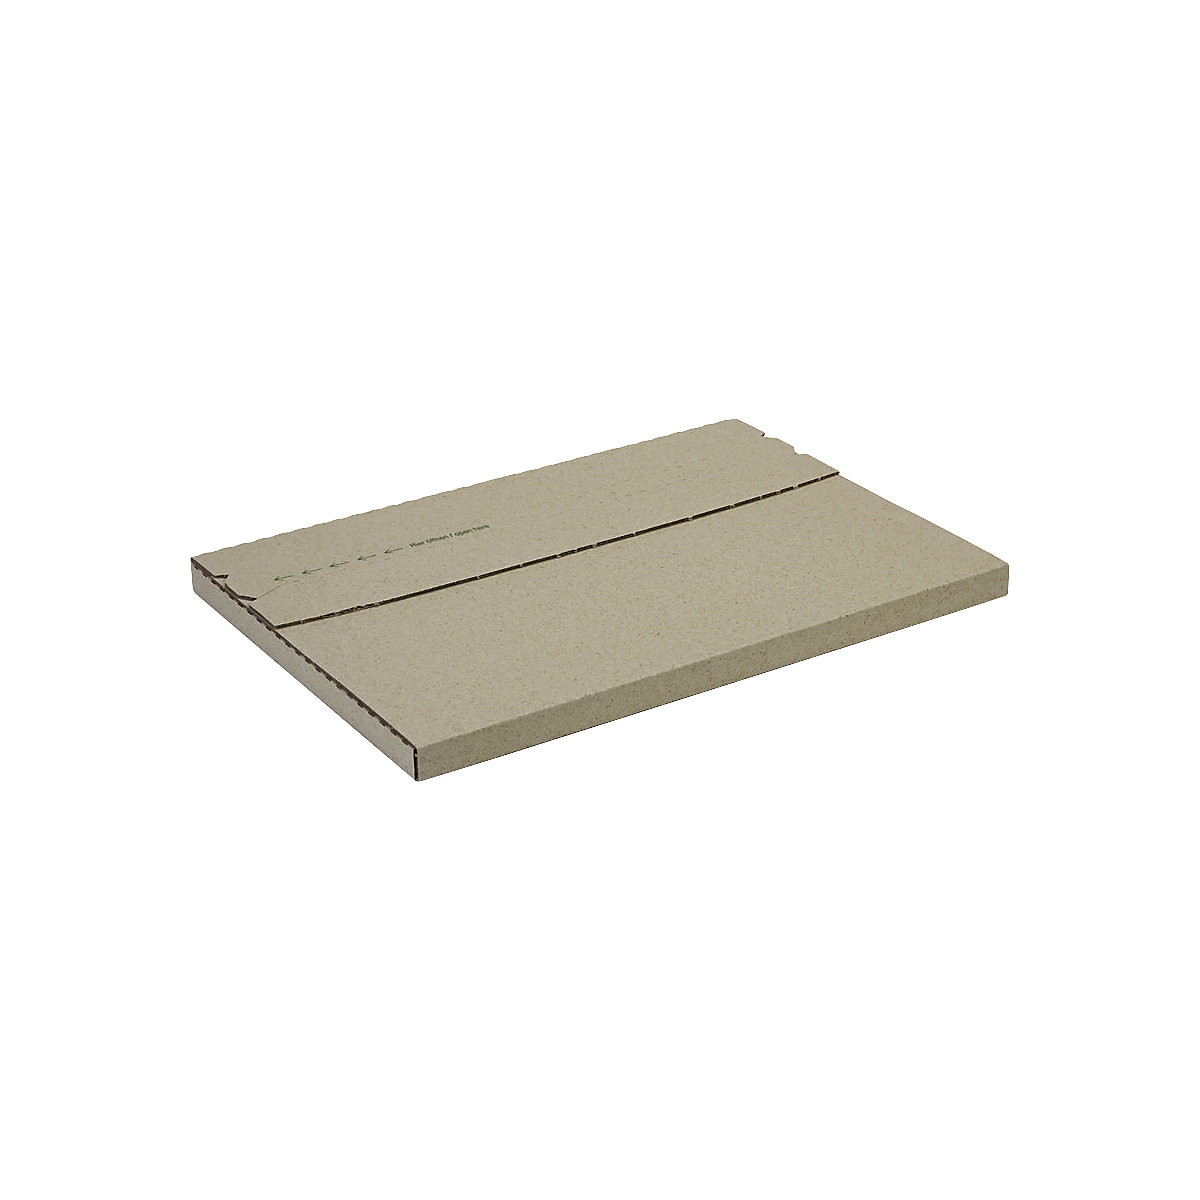 Graspapier-Flachpack terra, selbstklebend, Innen-LxBxH 314 x 225 x 13 mm, ab 20 Stk-1